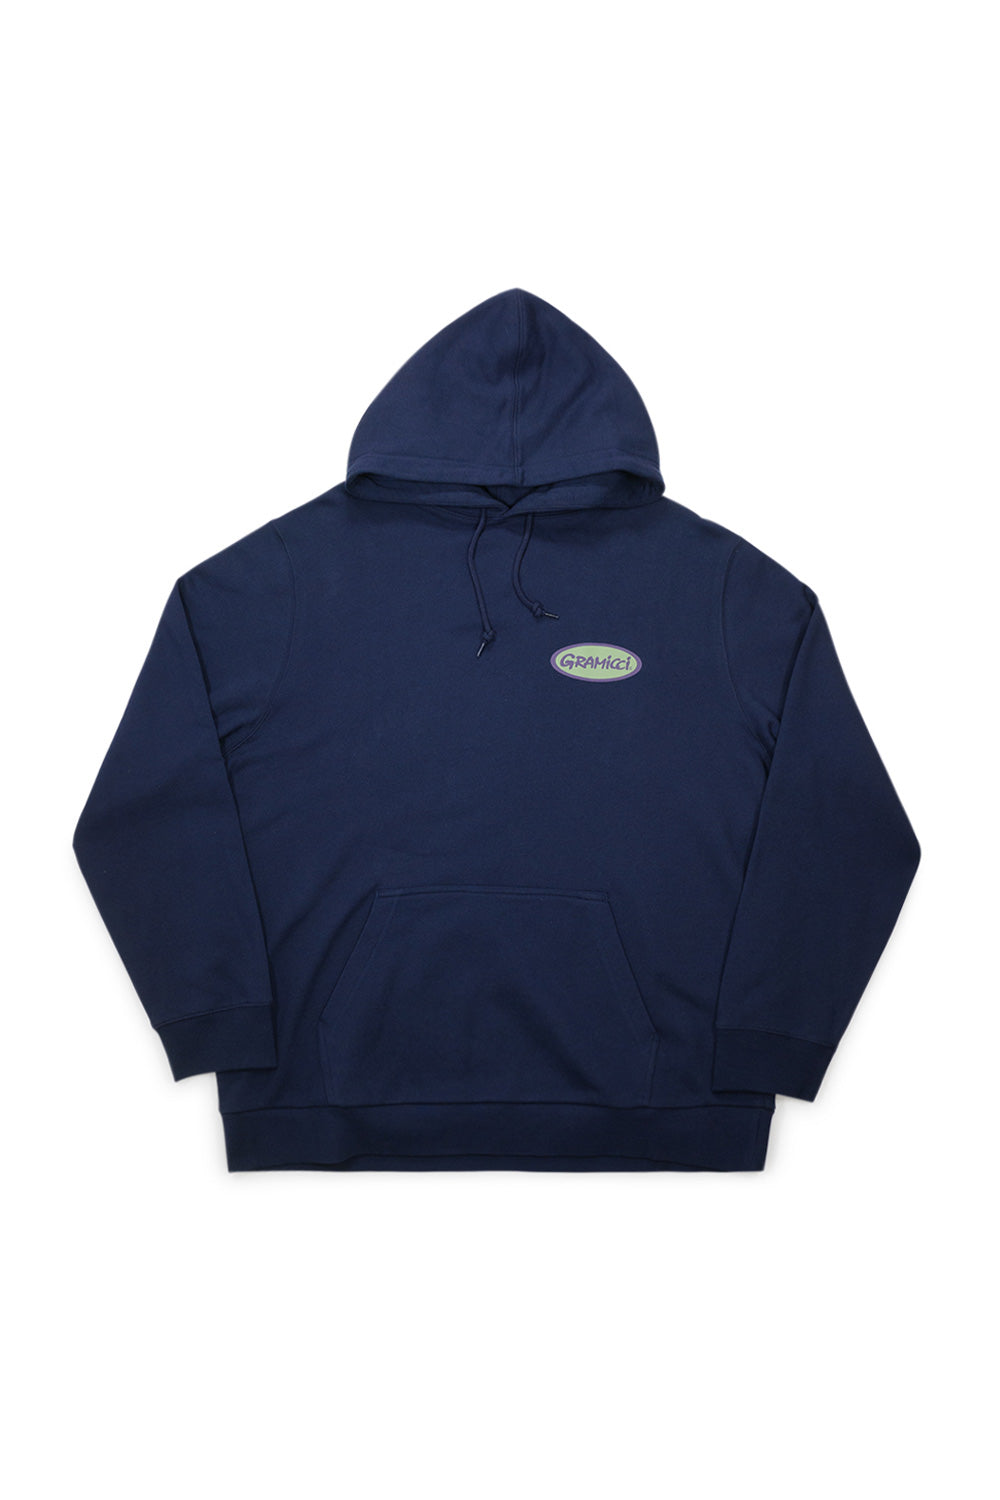 Gramicci Oval Hooded Sweatshirt Navy - BONKERS